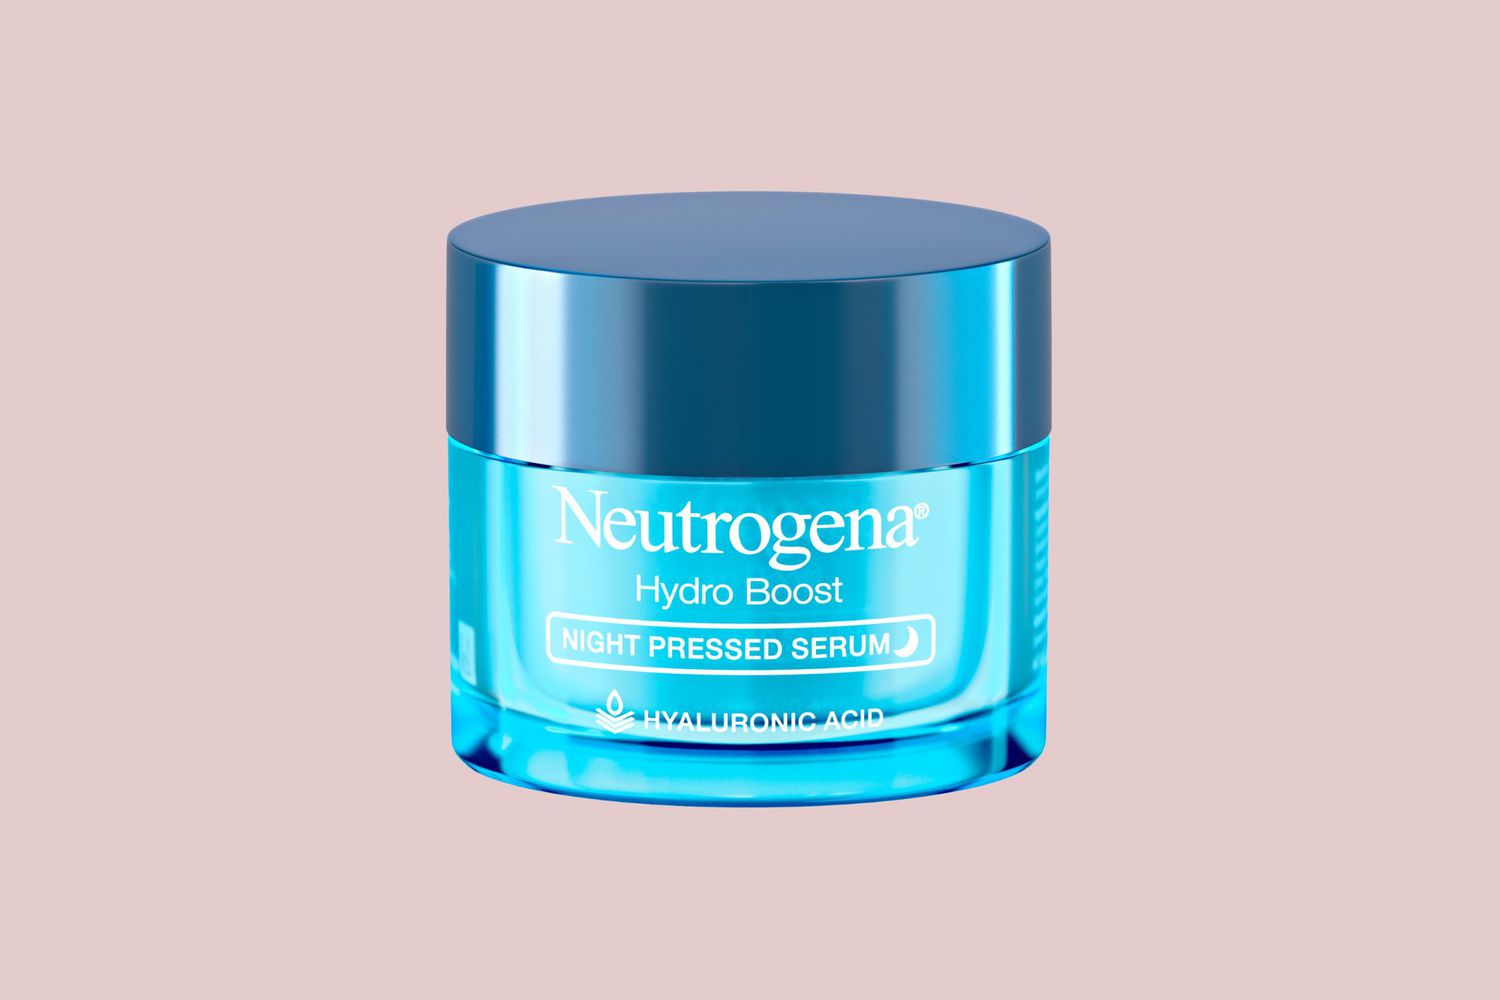 Neutrogena hydro boost night pressed serum